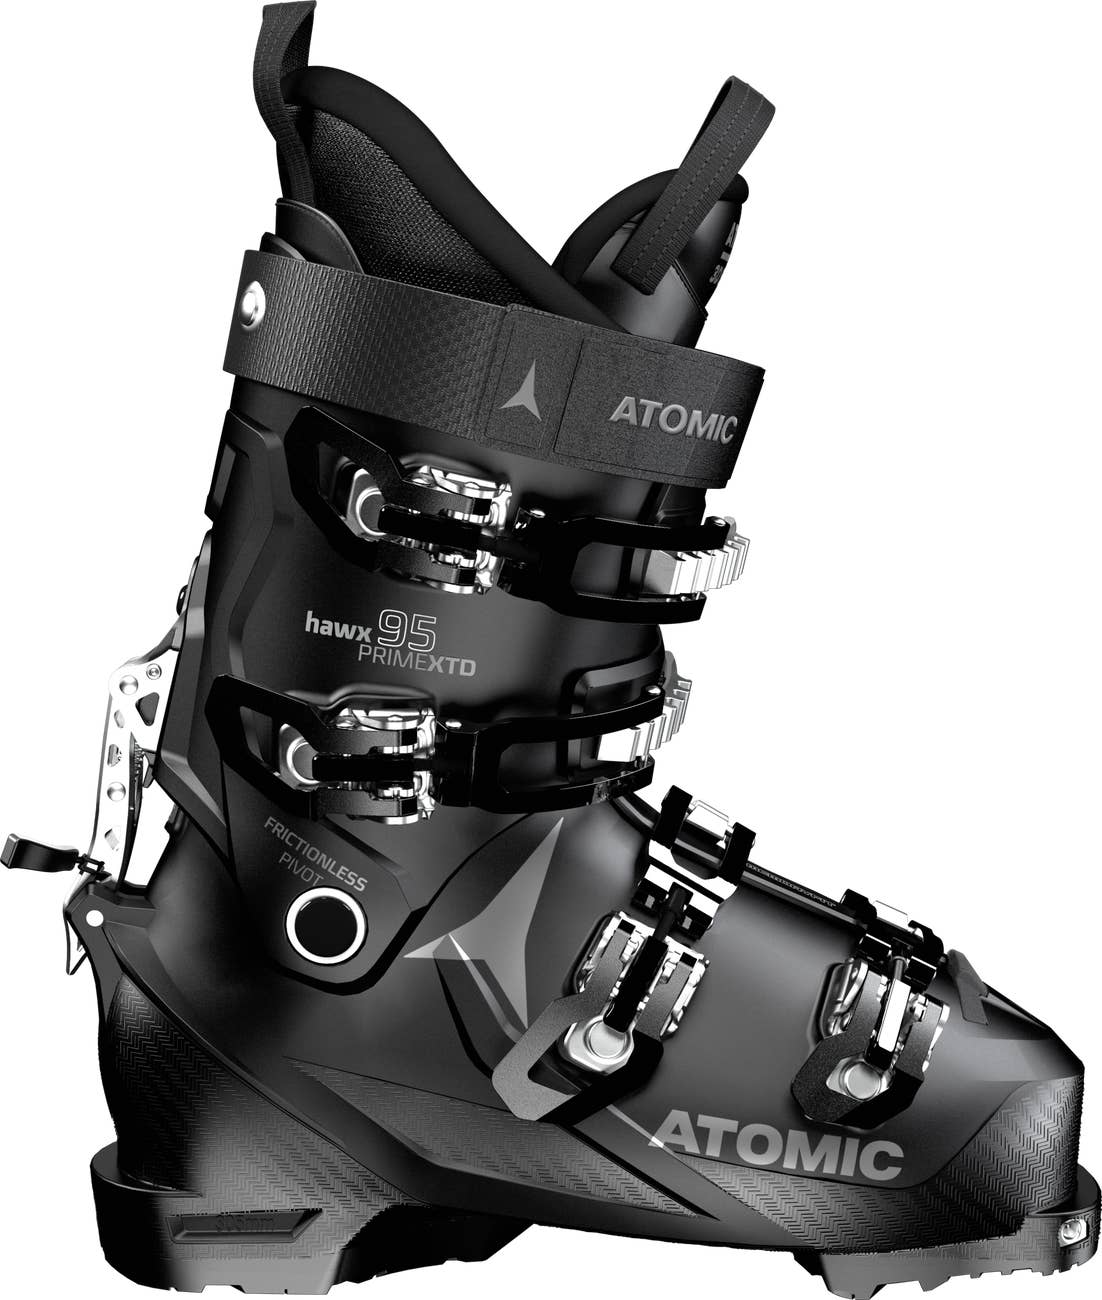 ATOMIC Hawx Prime XTD 95 ski boots - Womens - Black/White